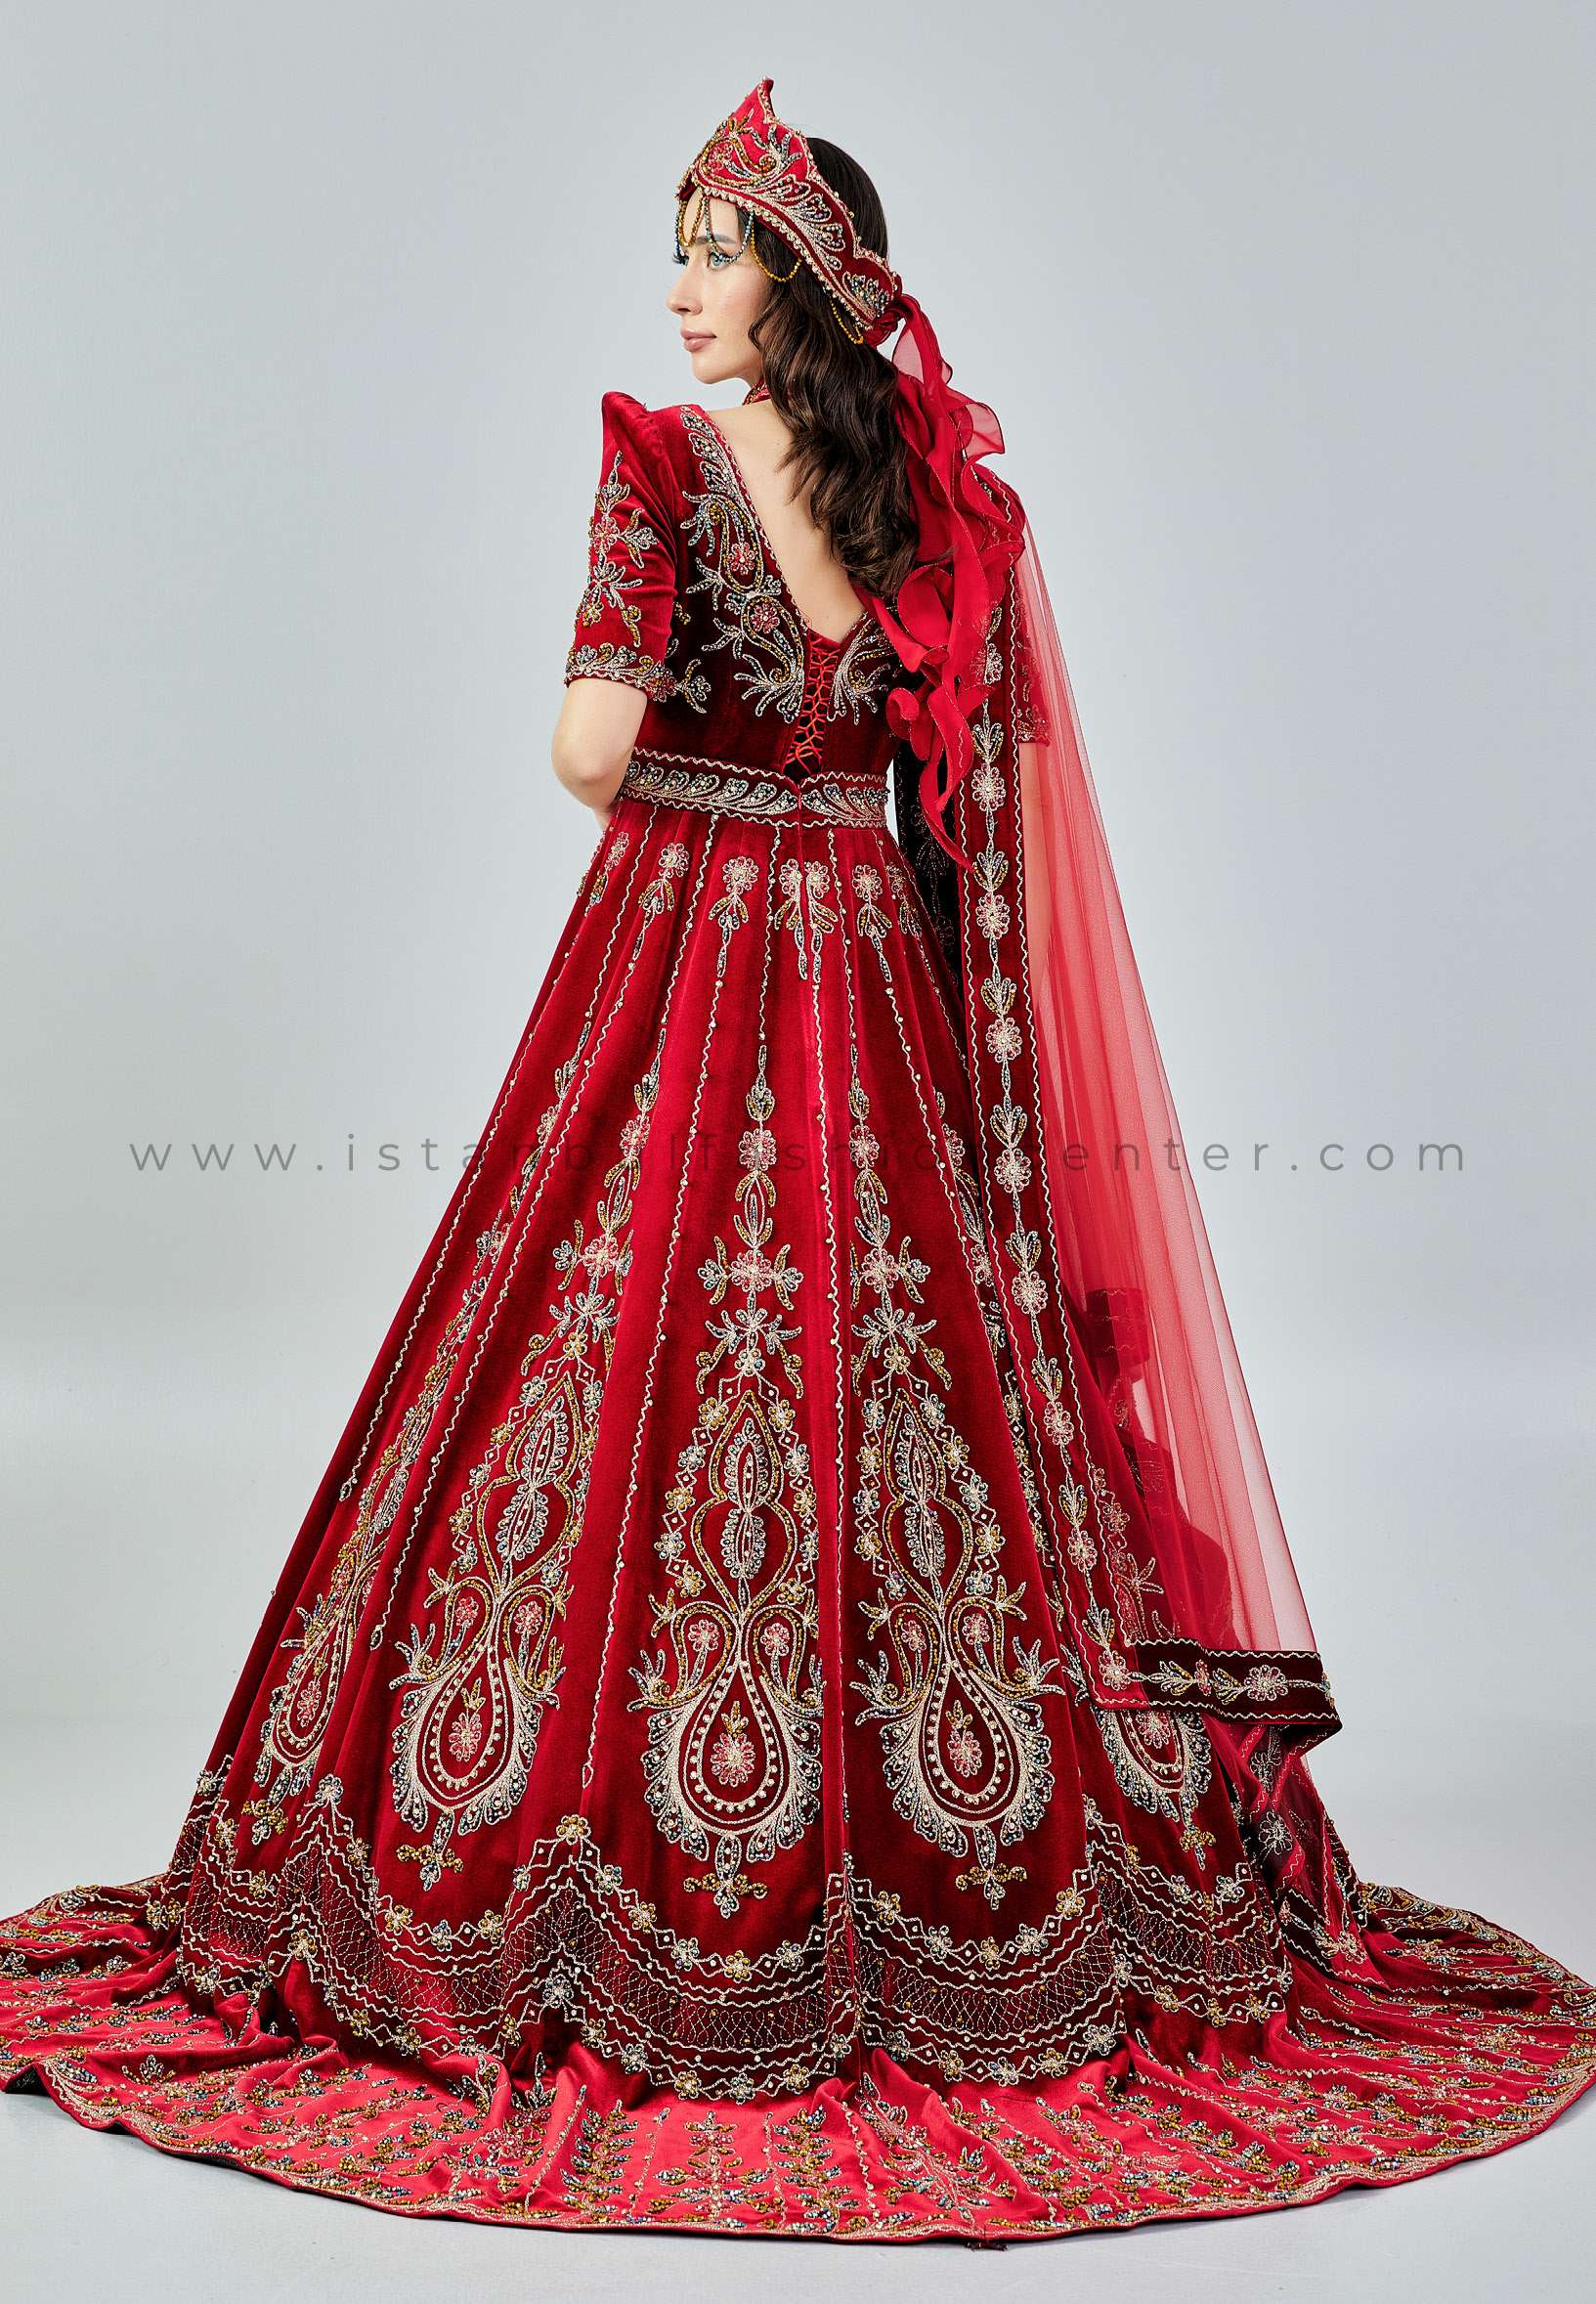 Wedding Wear Free Size Short Sleeve Red Lehenga Choli at 45000.00 INR in  Mumbai | Ashika Sarees Limited